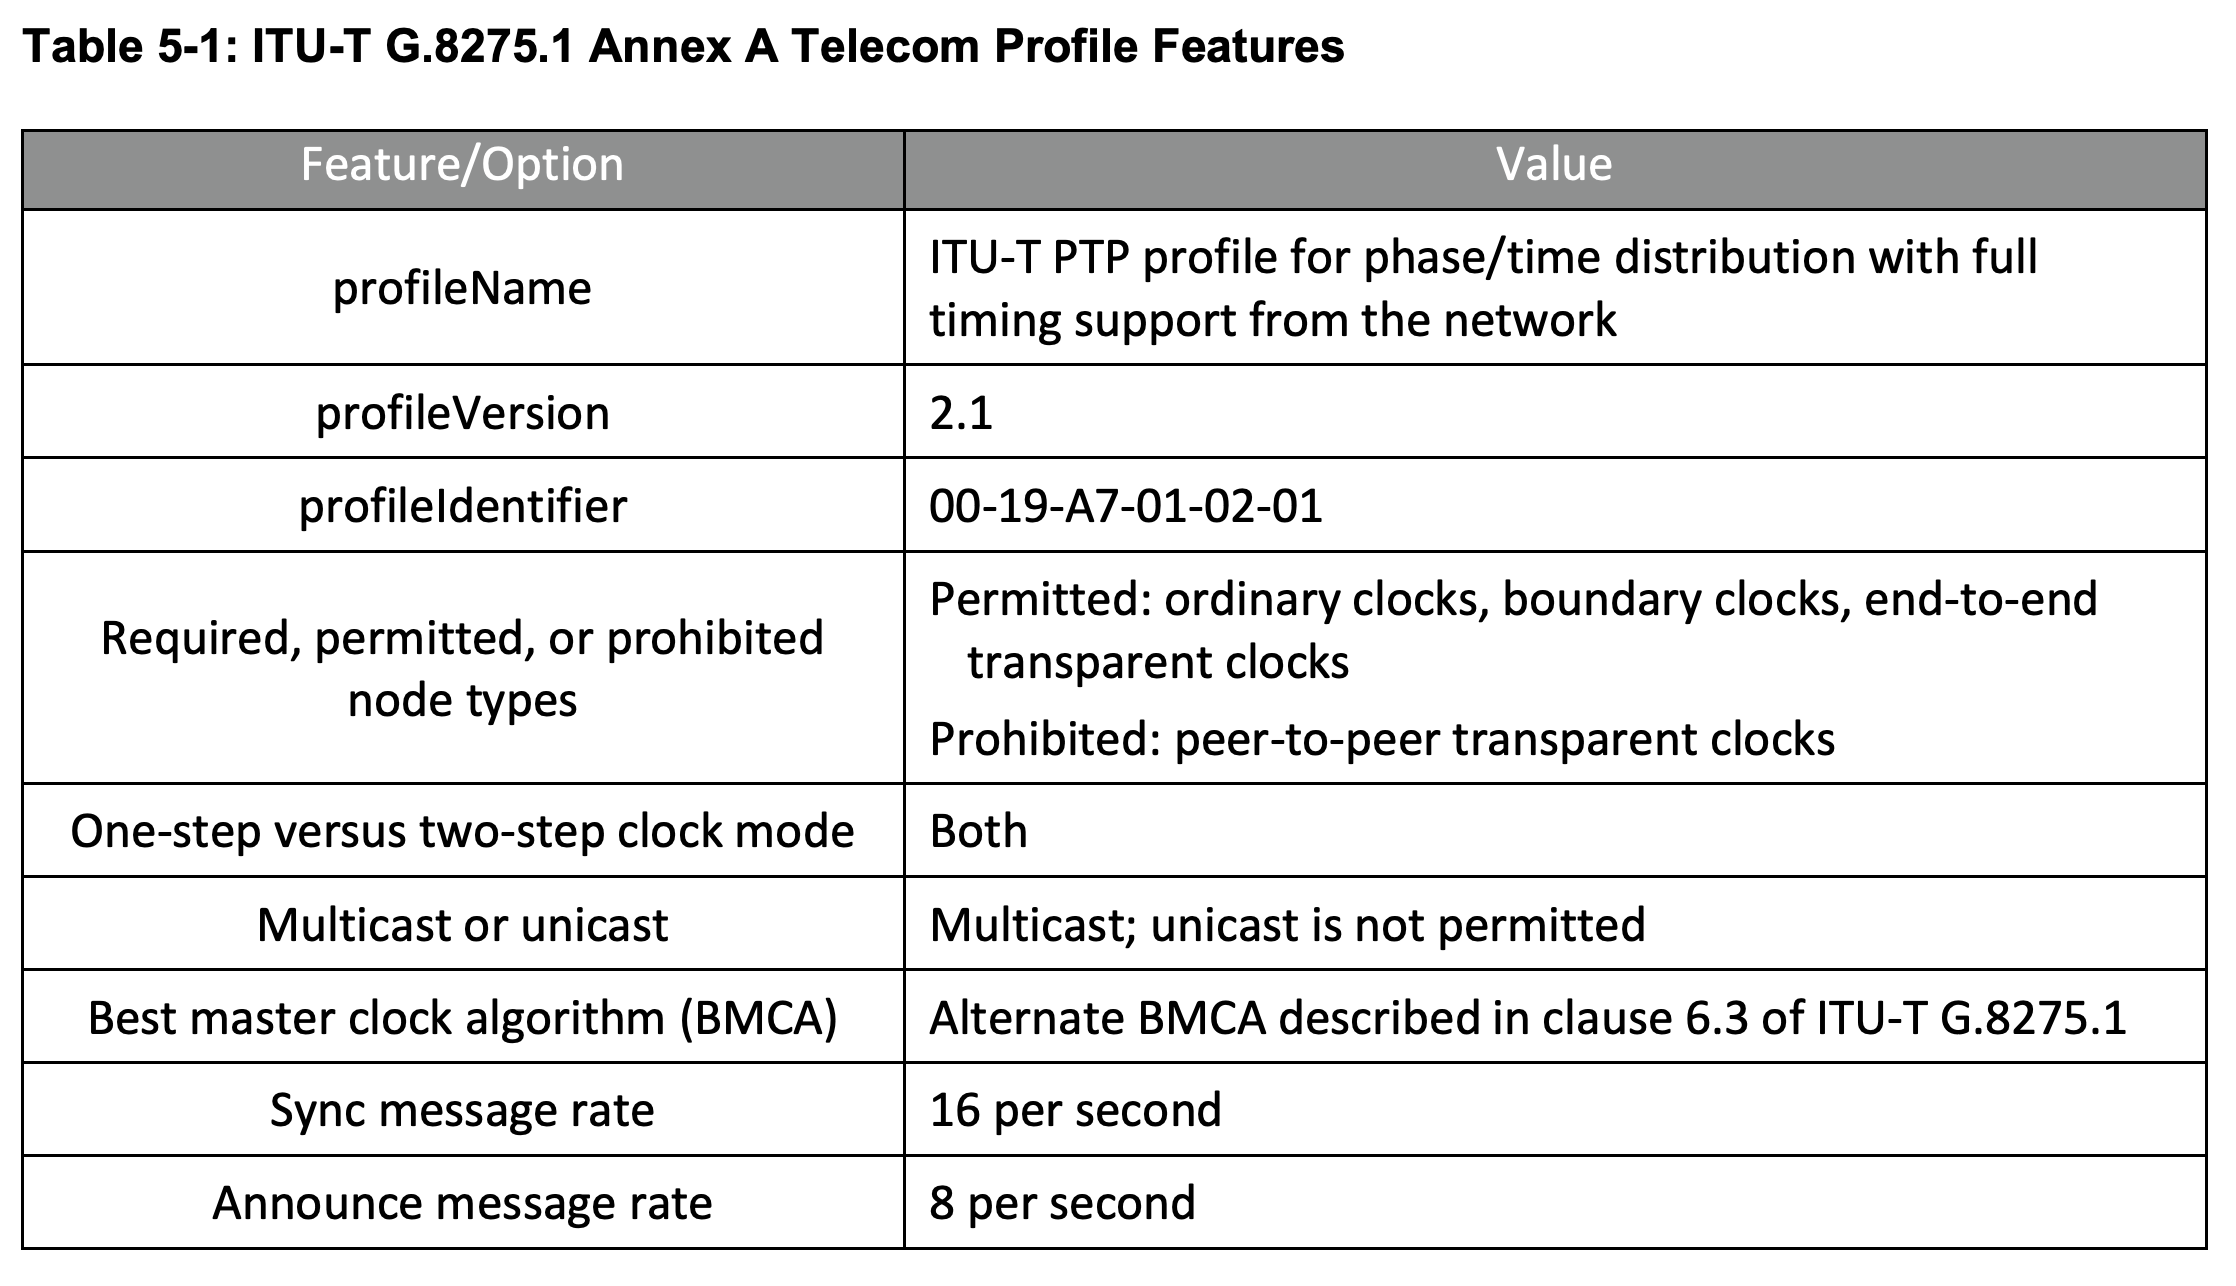 Table 5-1 ITU-T G.8275.1 Annex A Telecom Profile Features